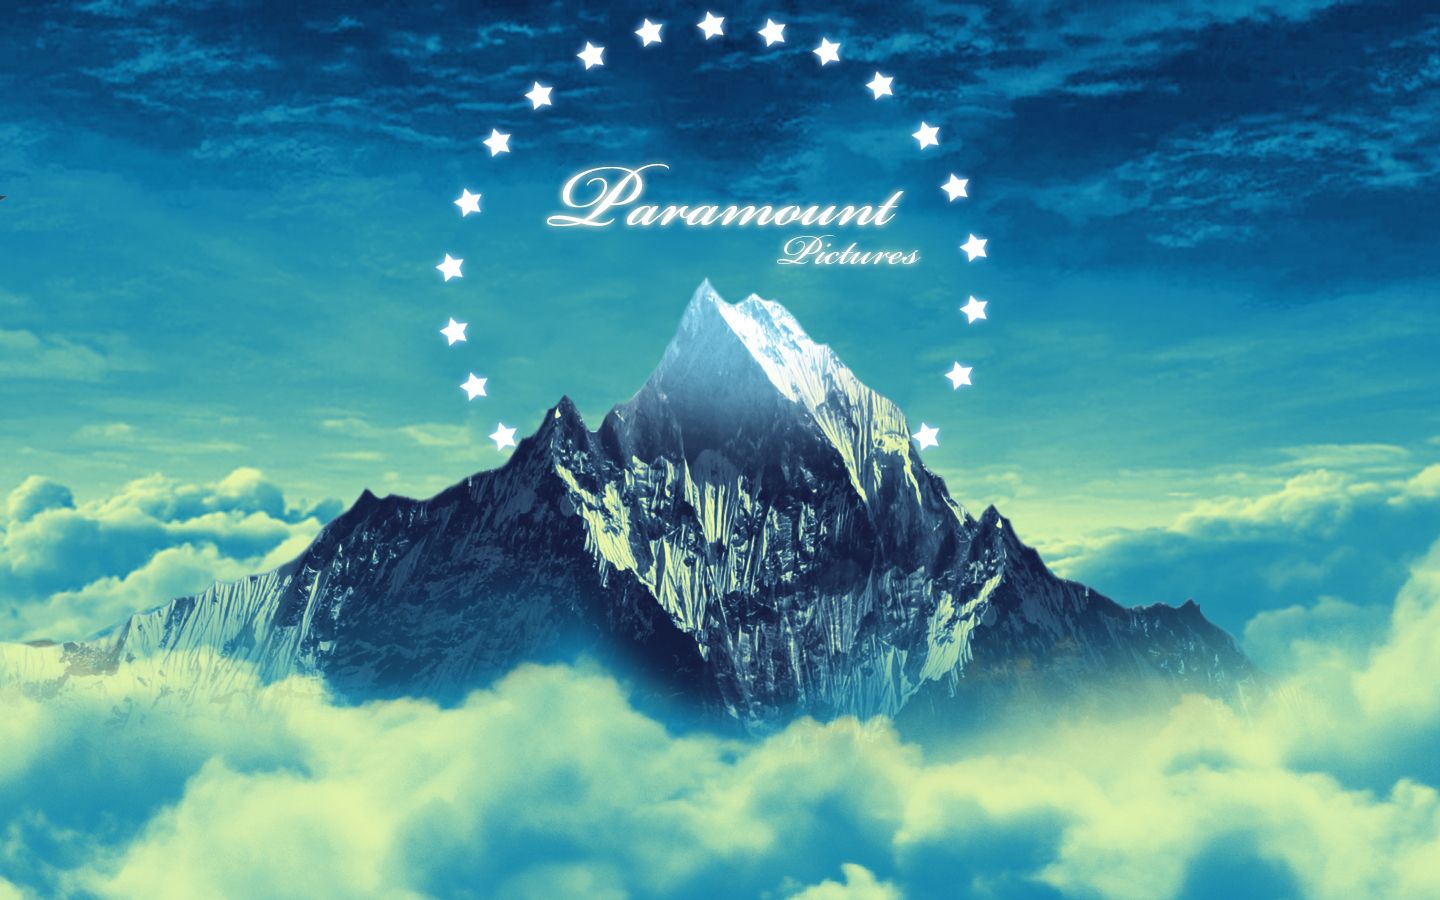 Paramount Background. Paramount Studios Wallpaper, CBS Paramount HD Wallpaper and Paramount Background